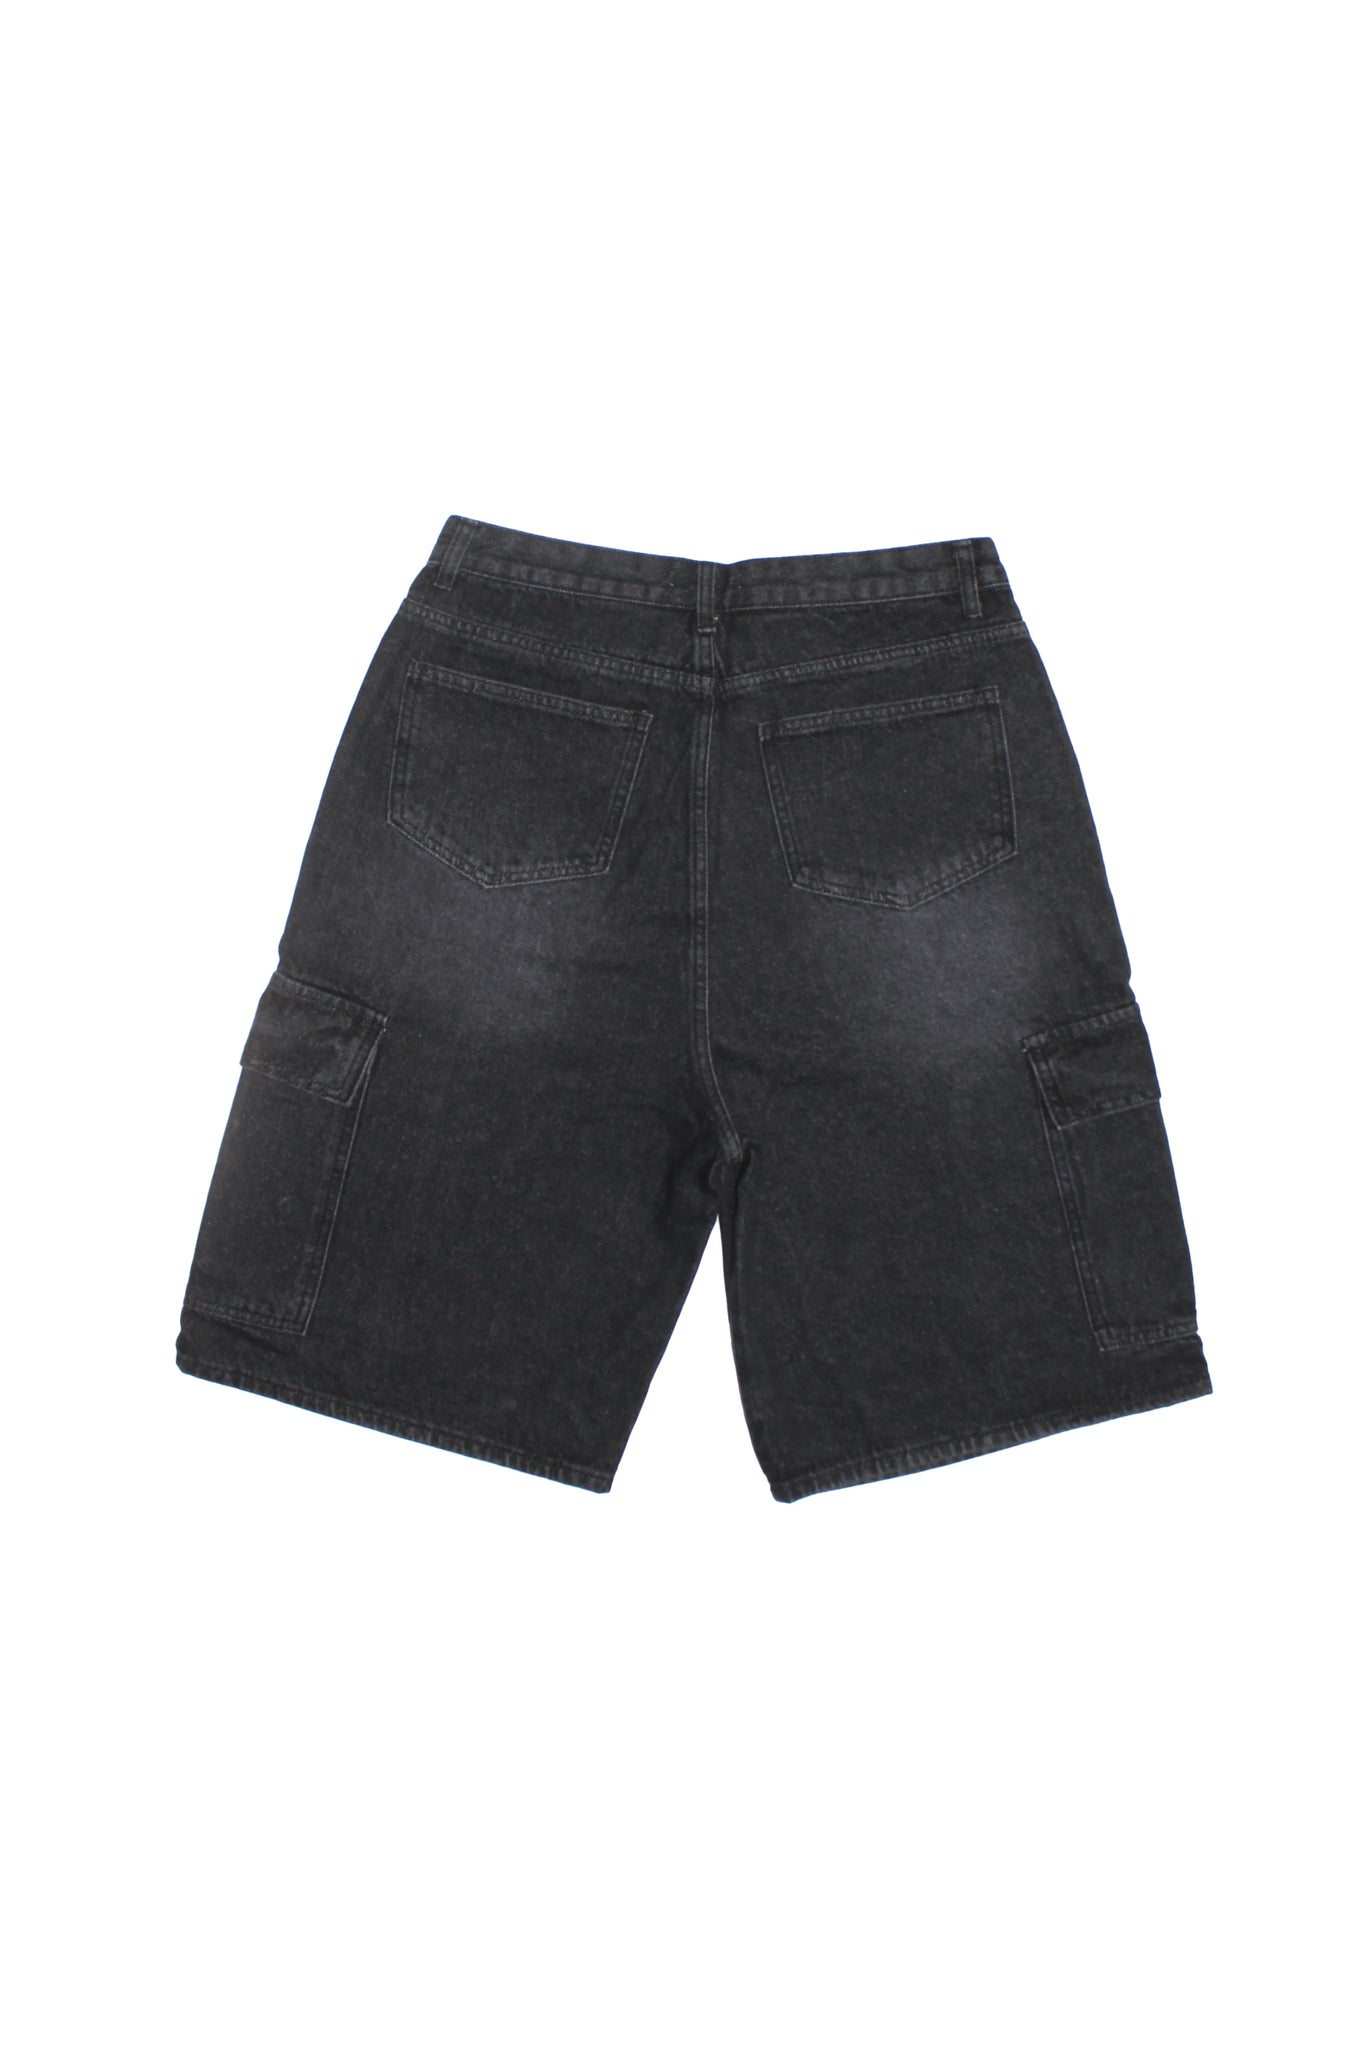 East Cargo Denim Shorts in Black